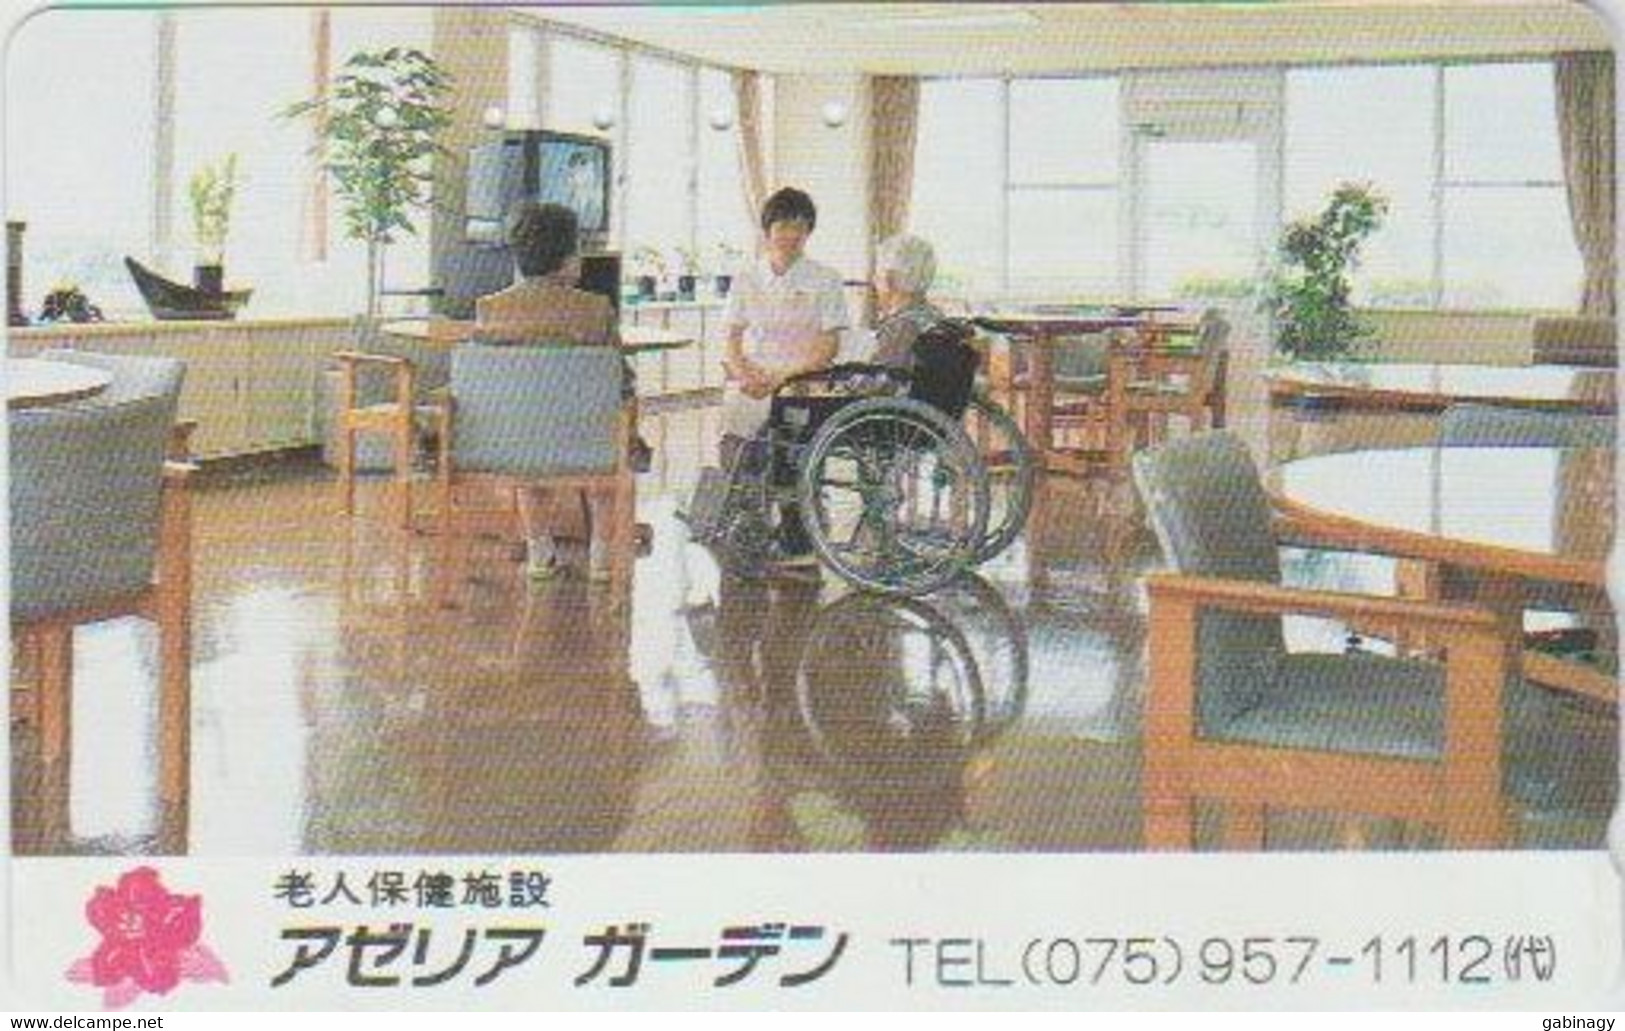 HEALTH - JAPAN-024 - 110-011 - Cultural